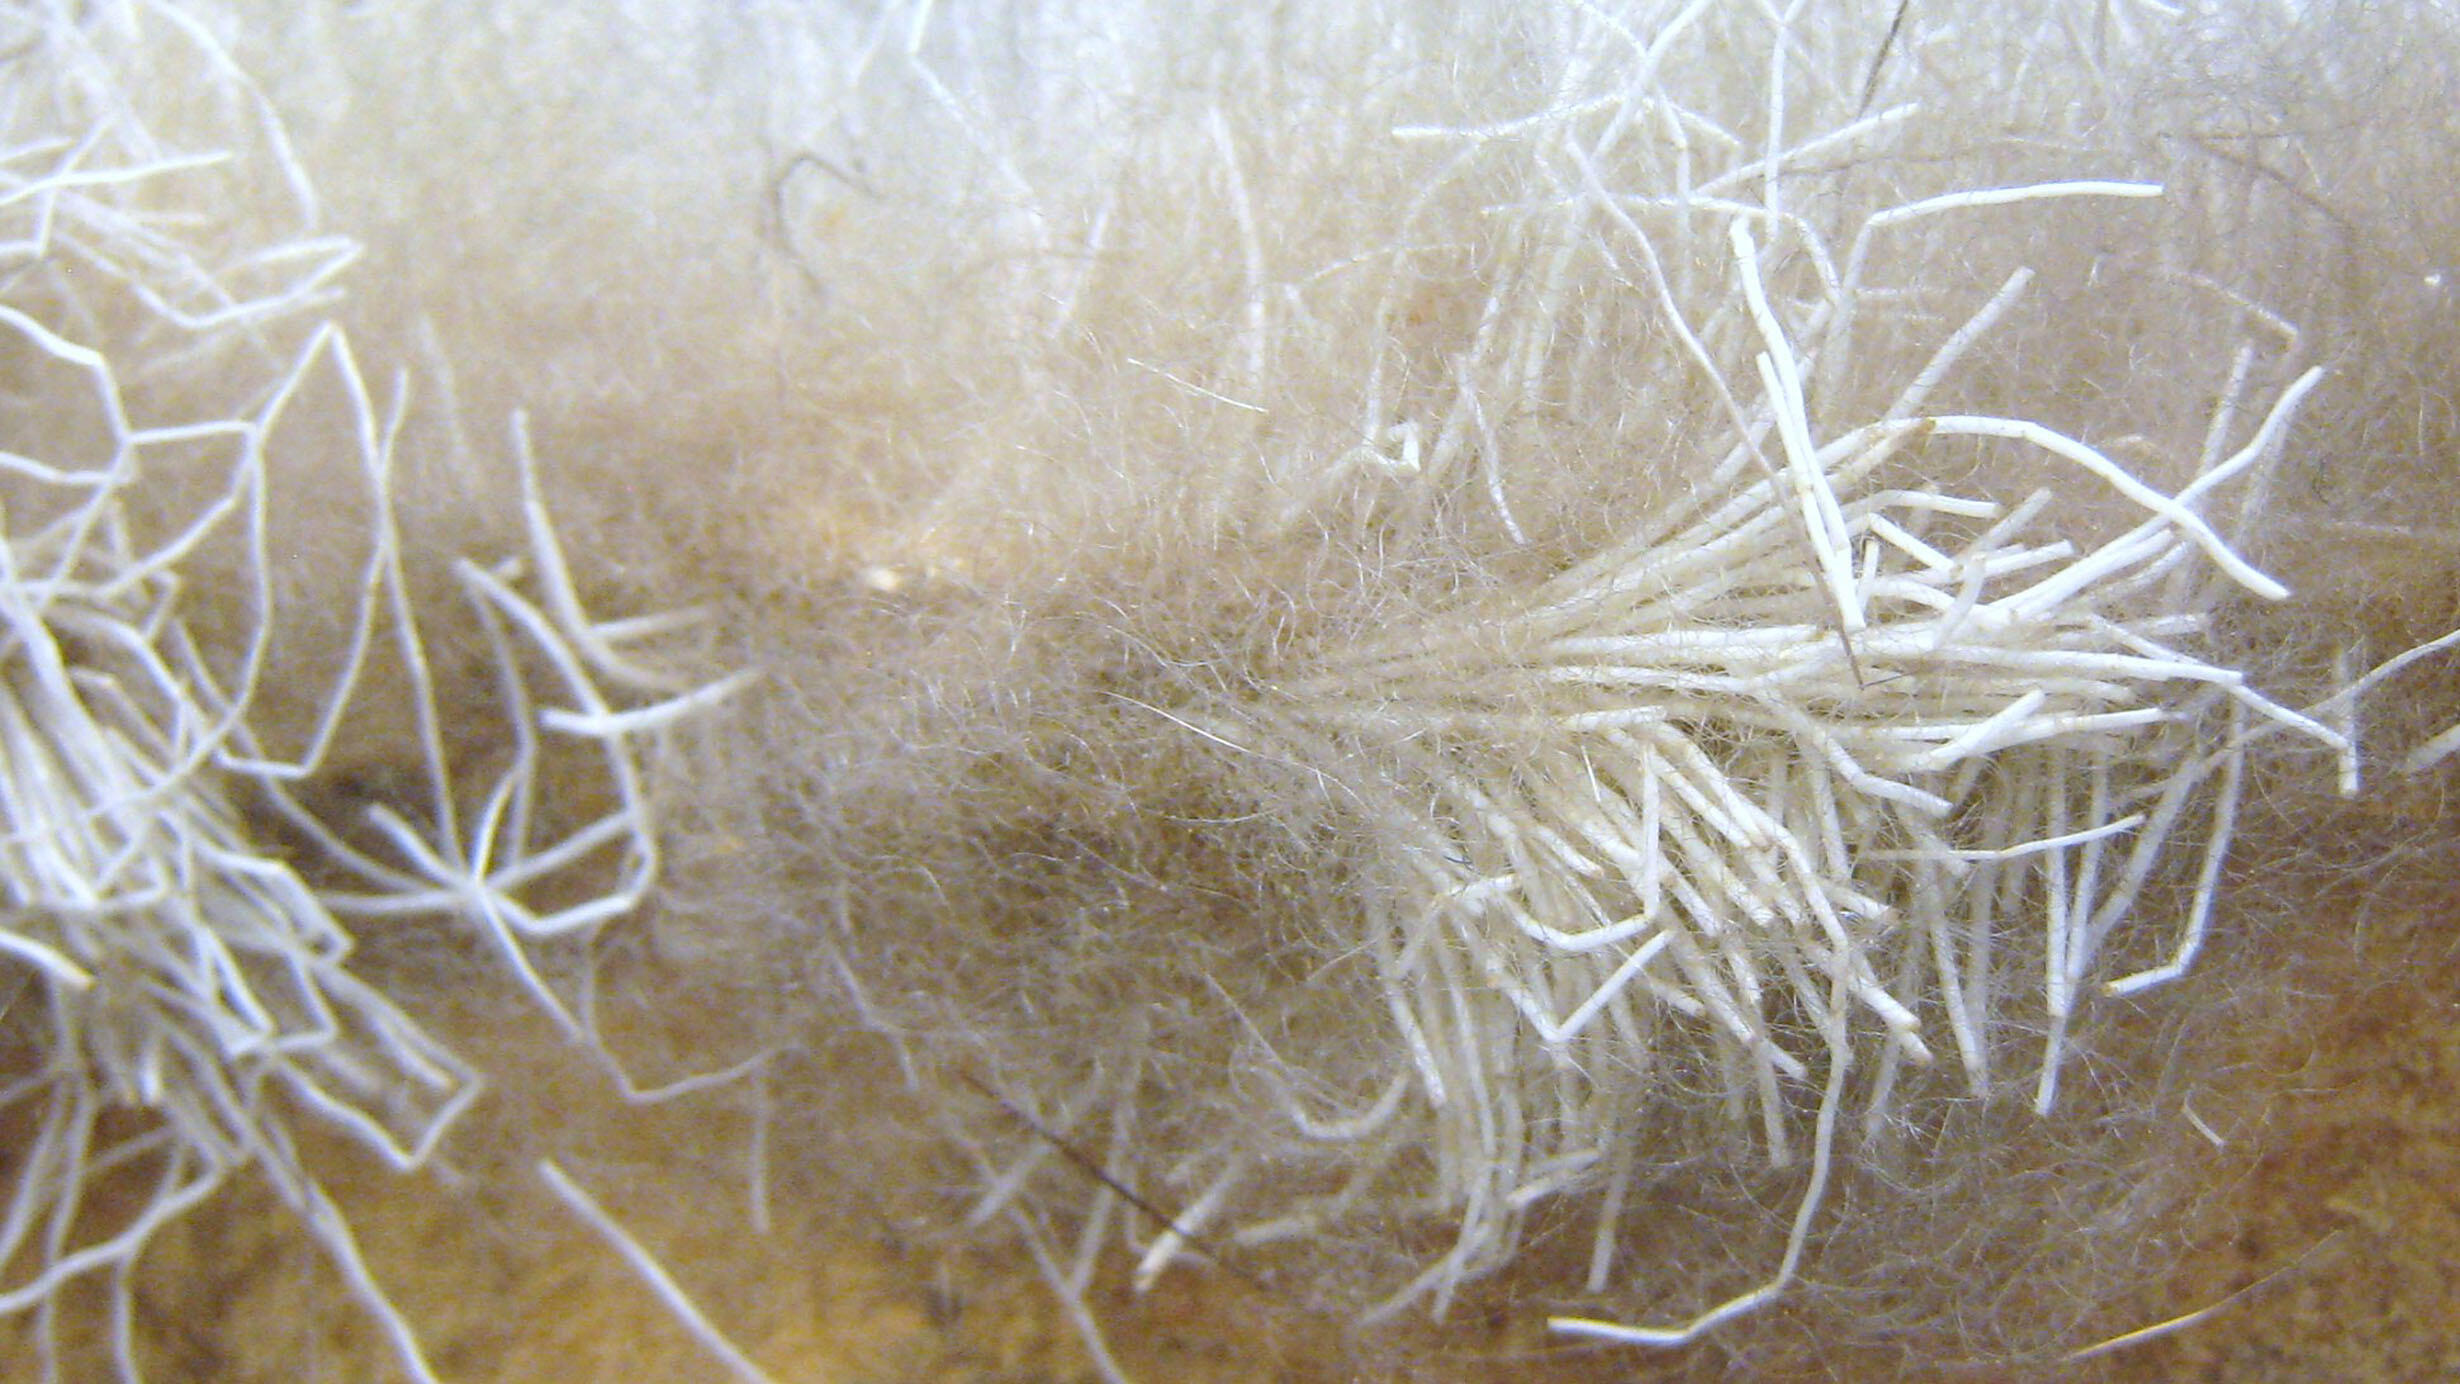 Extreme closeup of hair fibers.